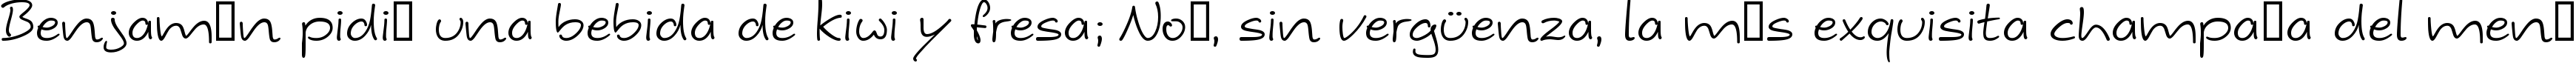 Пример написания шрифтом Hybi4 текста на испанском